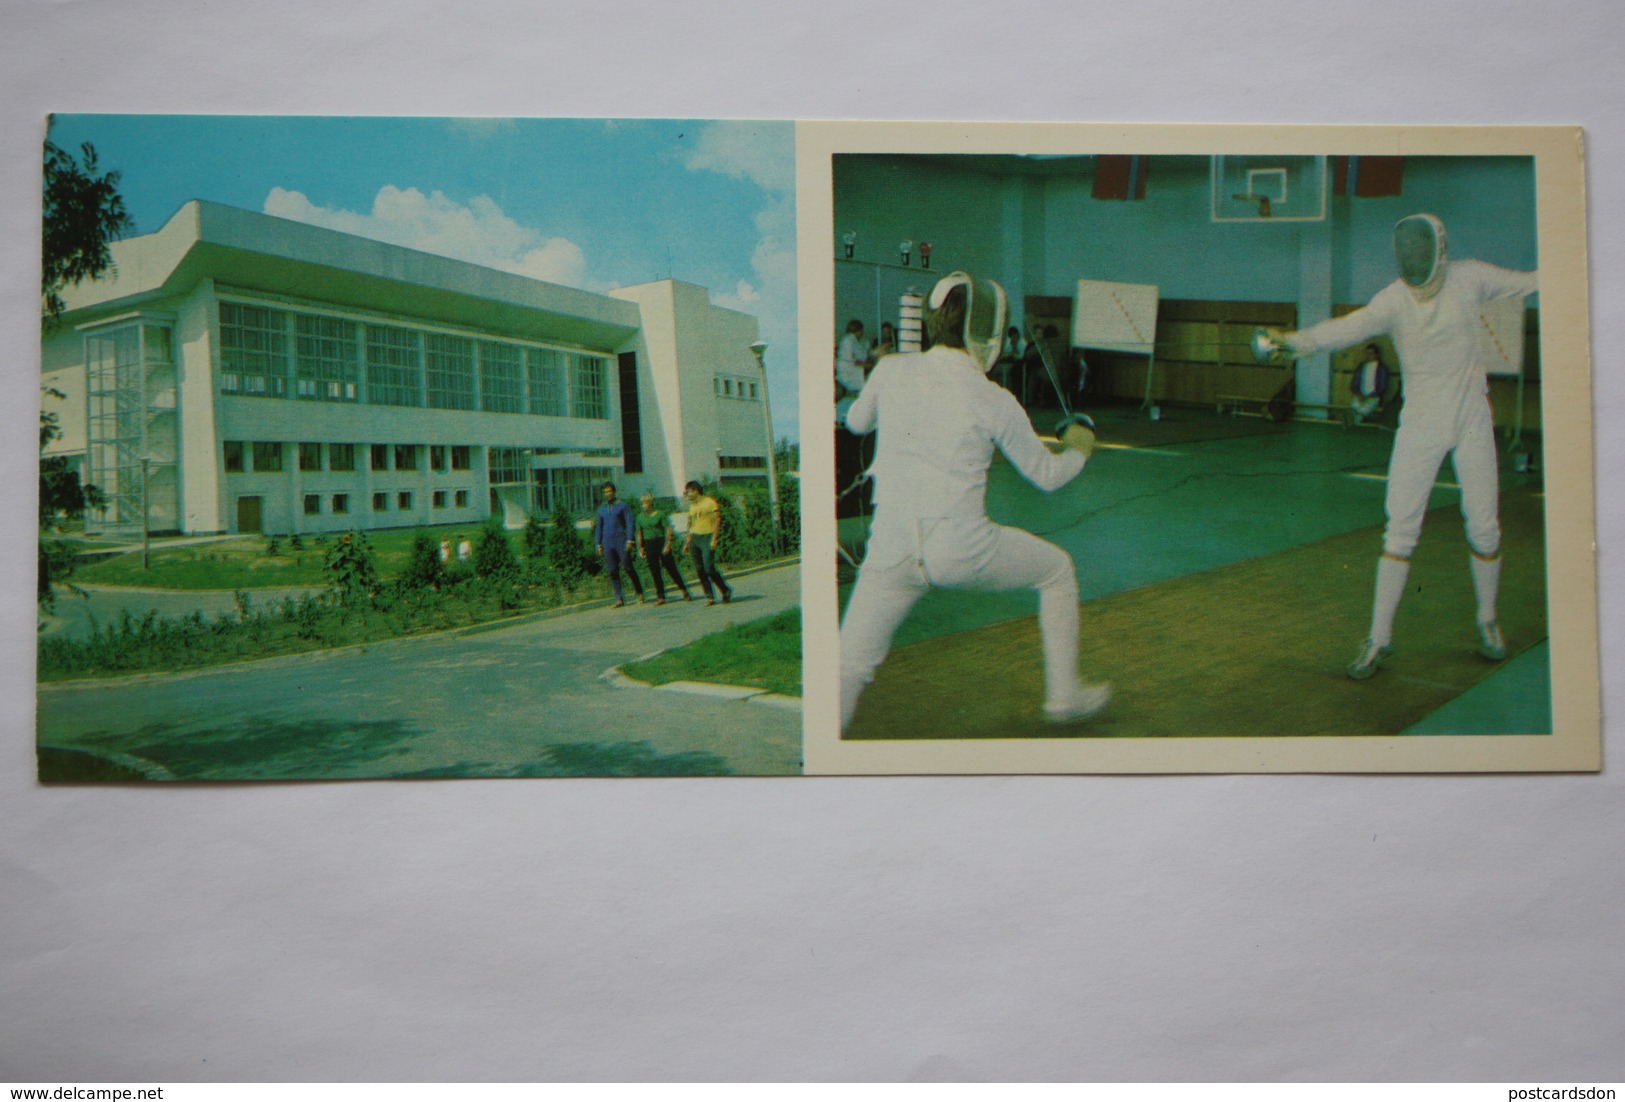 Old Postcard - Ukraine. Kiev. "Koncha-Zaspa" FENCING Center  - USSR   -  1970s - Fencing